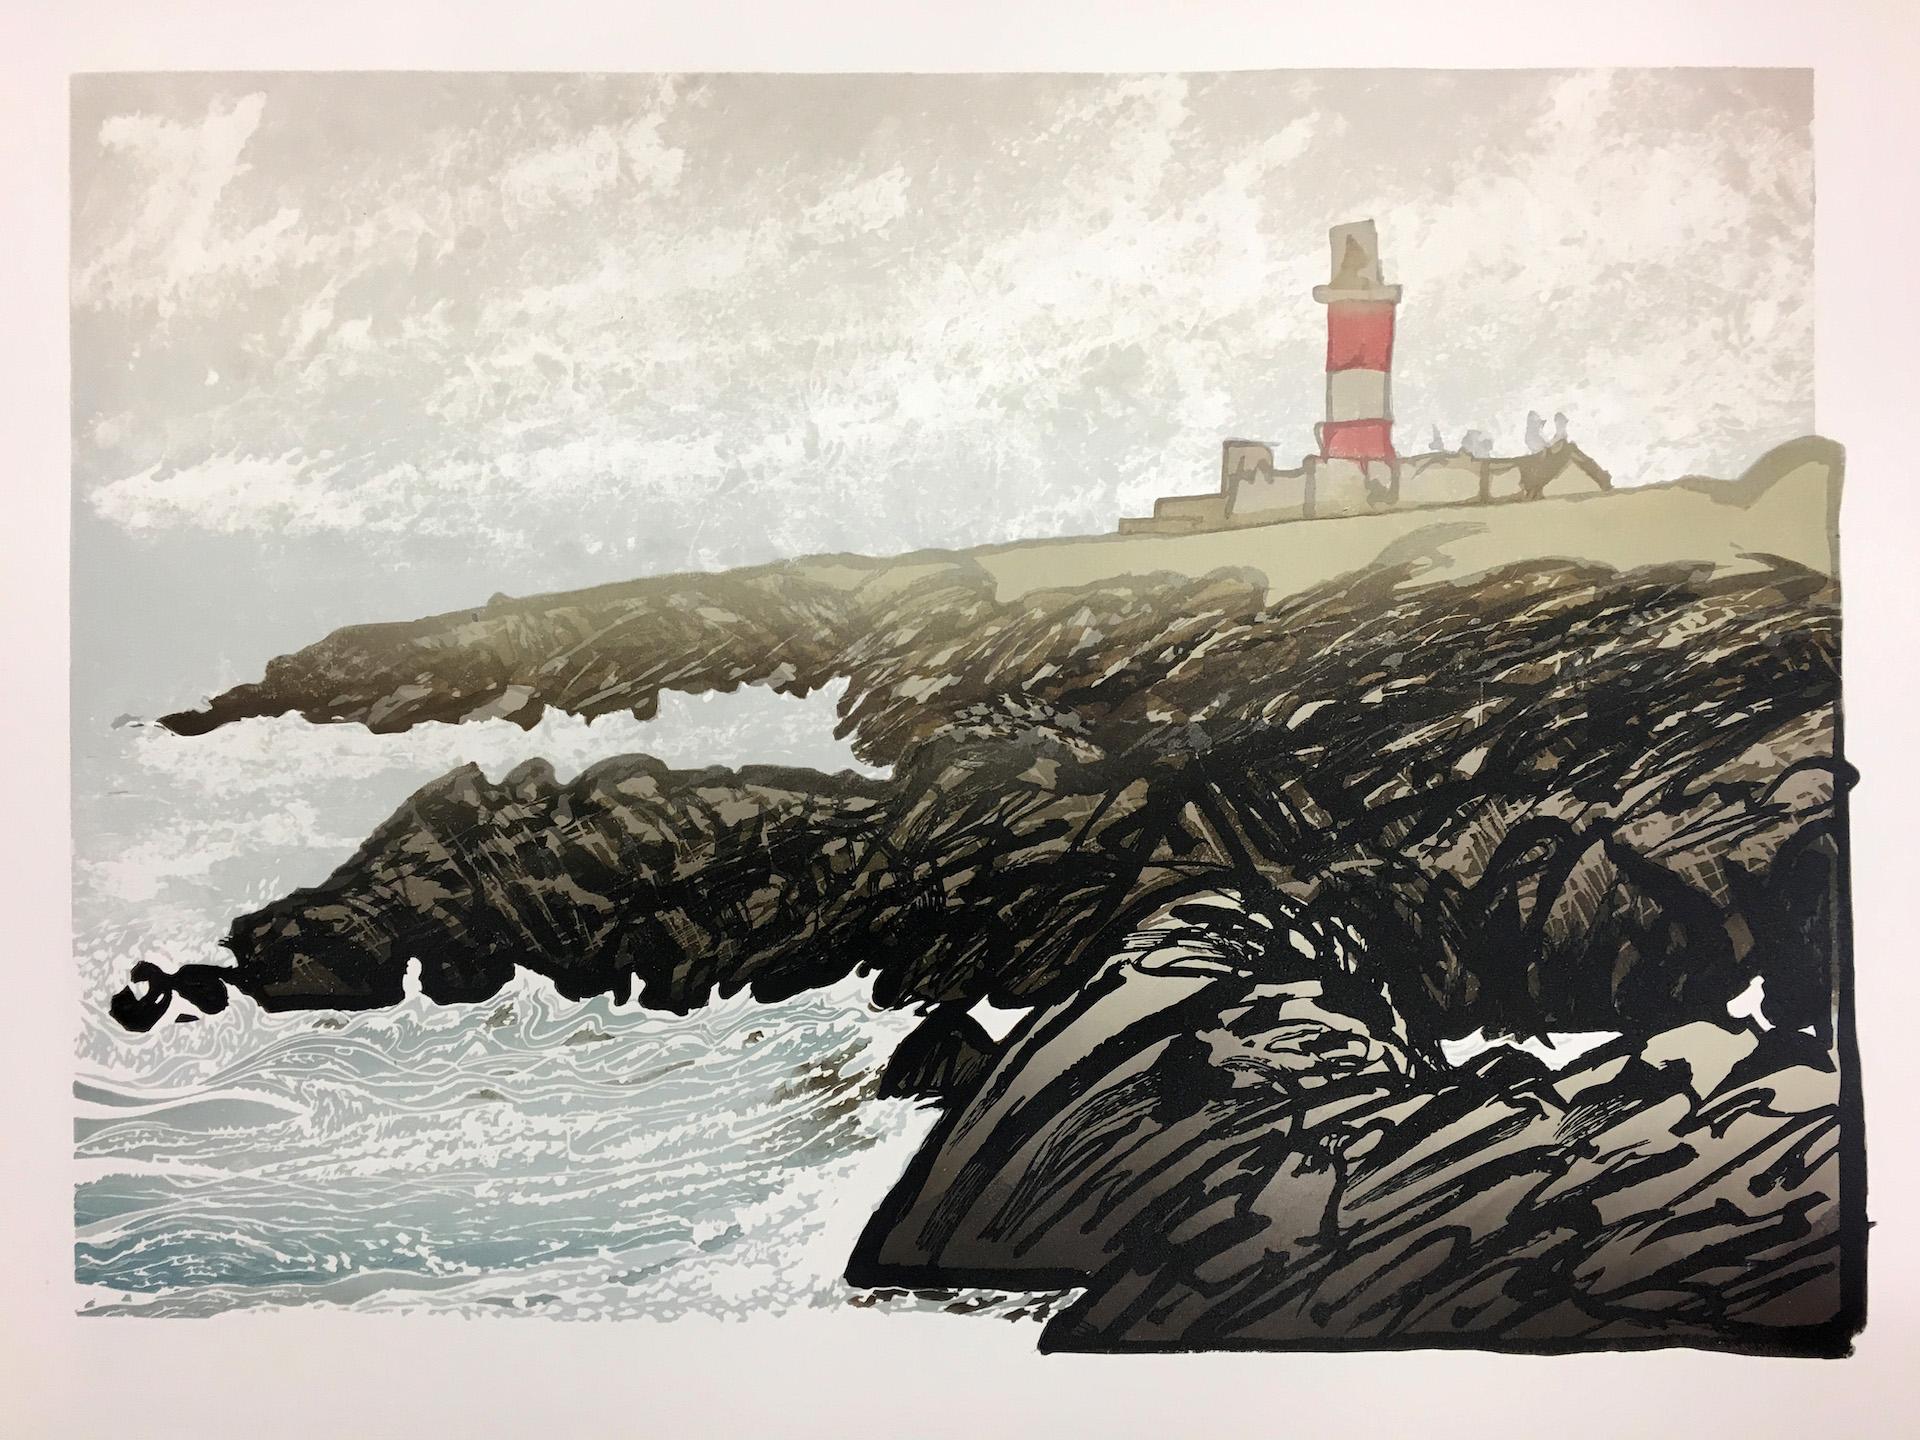 Ian Phillips, Lighthouse, Limited Edition Seascape Print, Coastal Art, Seaside